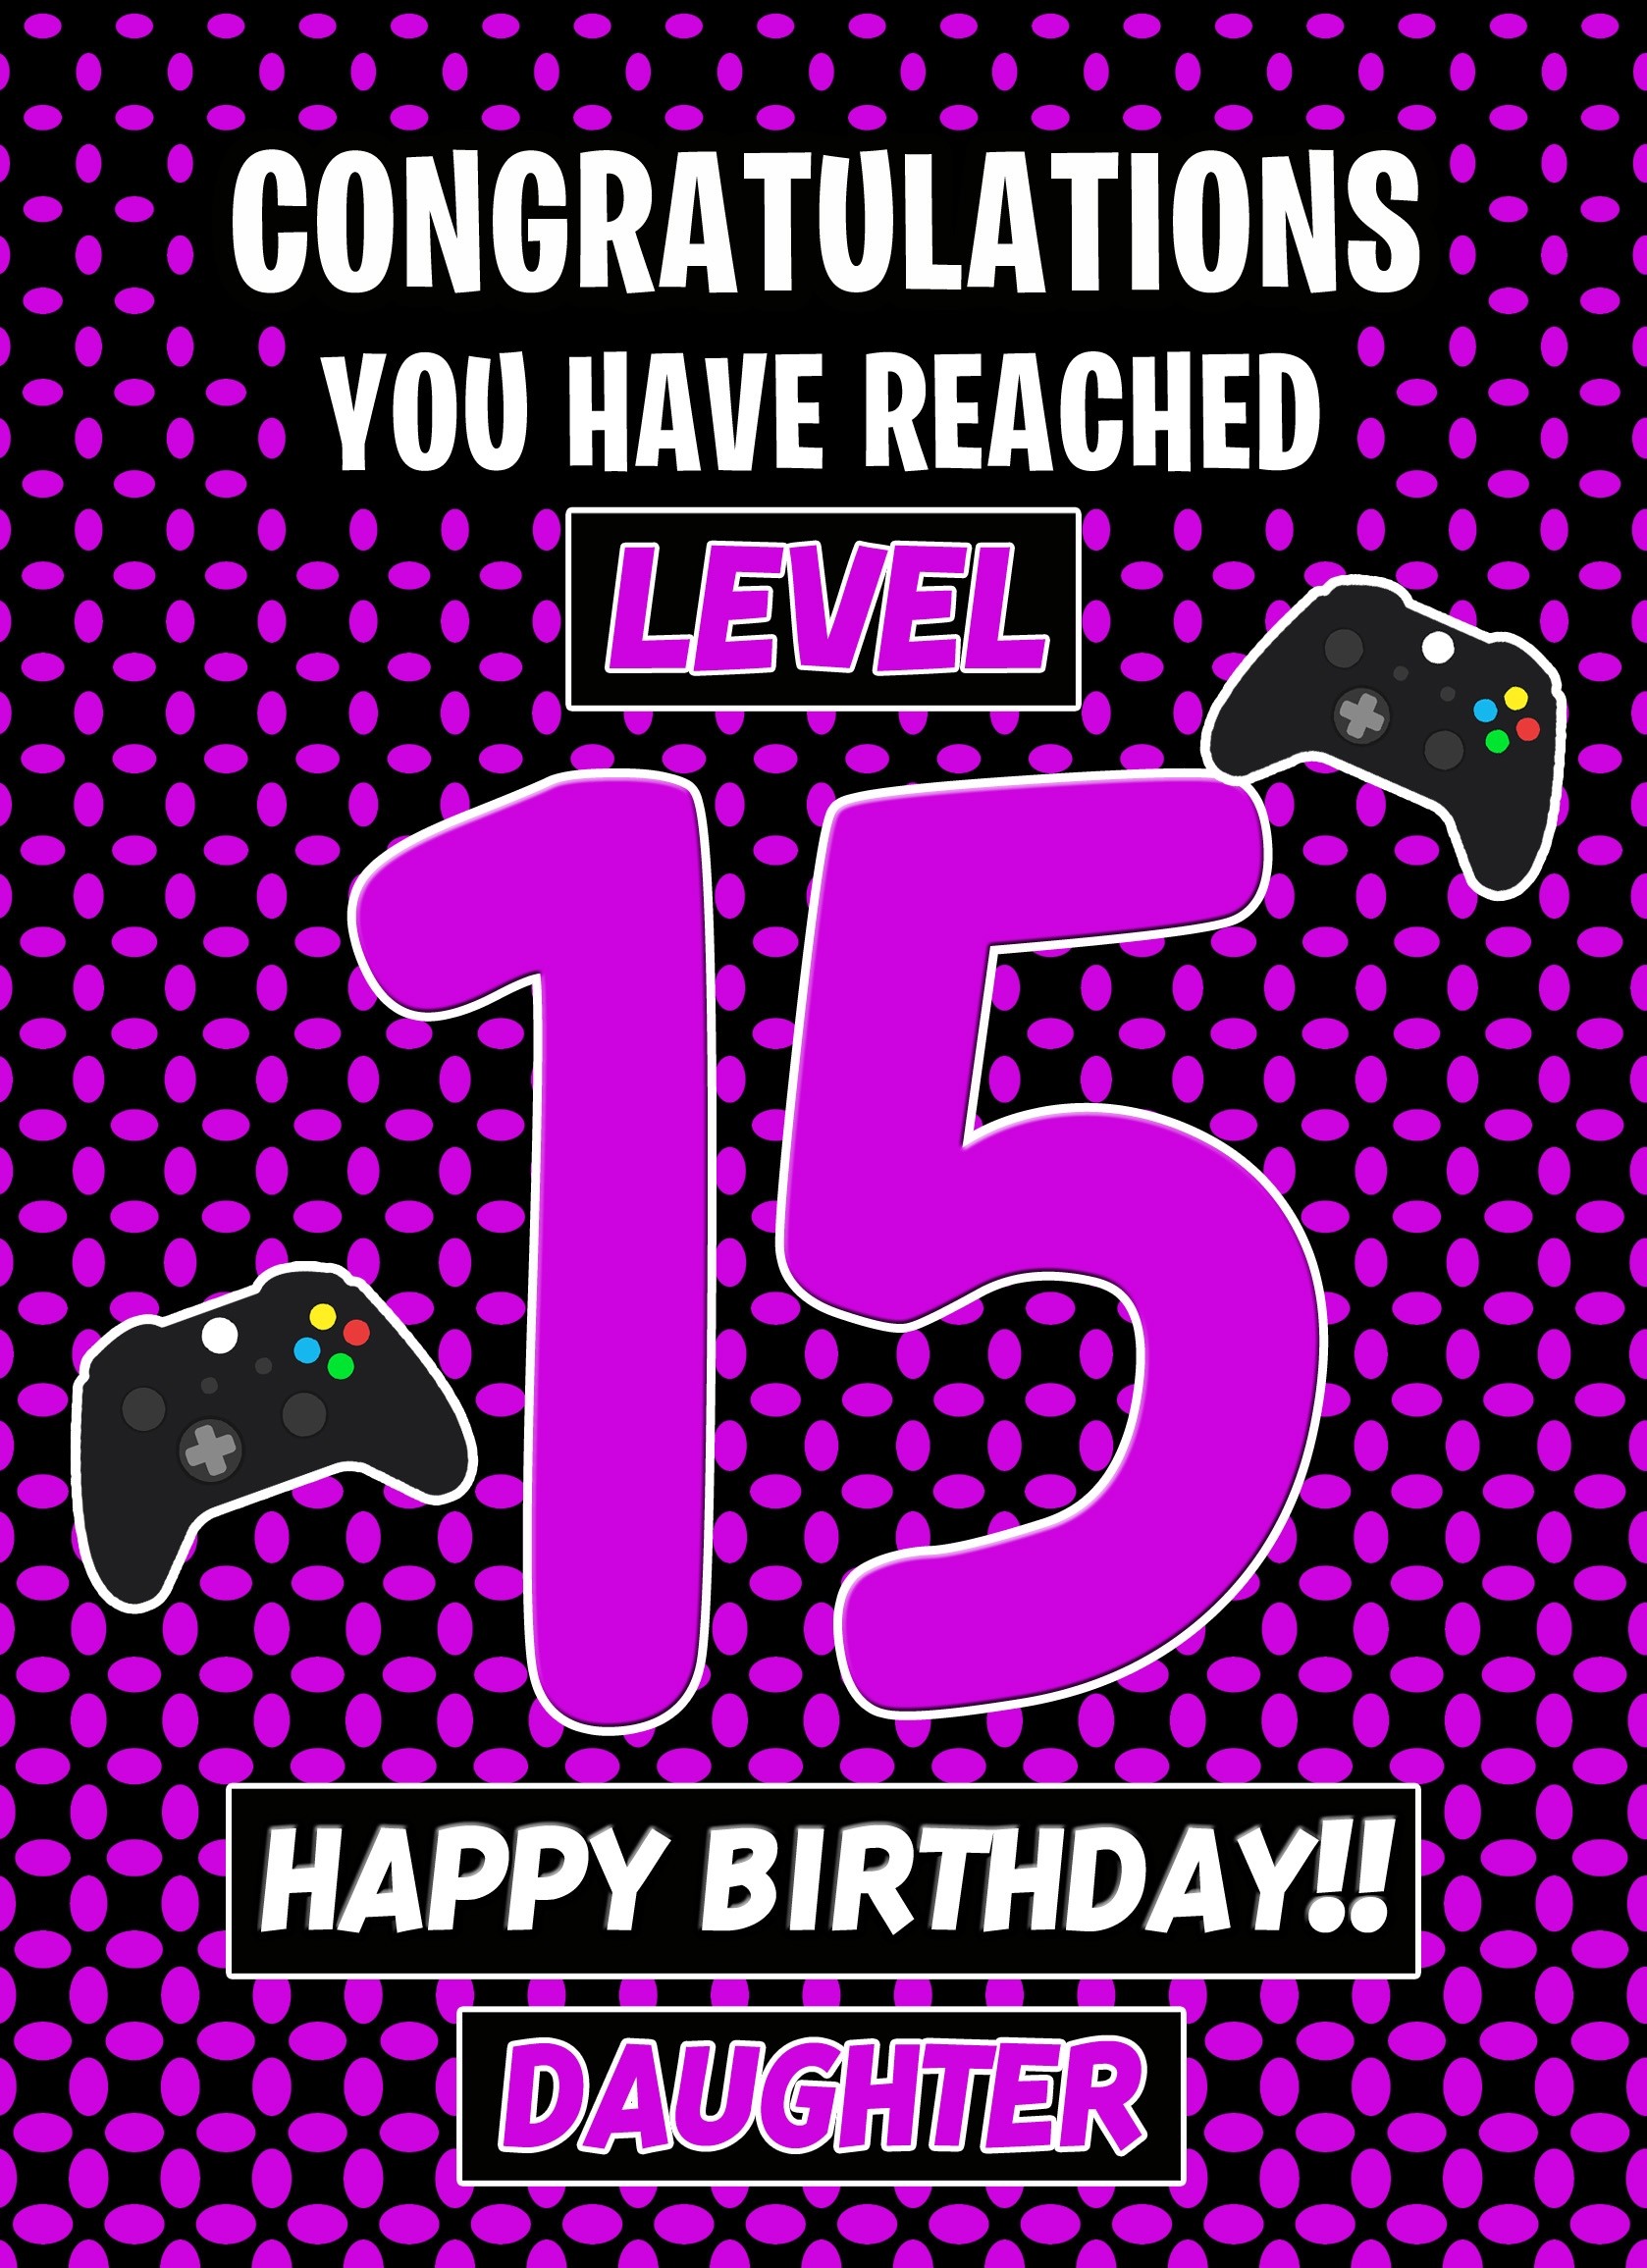 15th Level Gamer Birthday Card (Daughter)